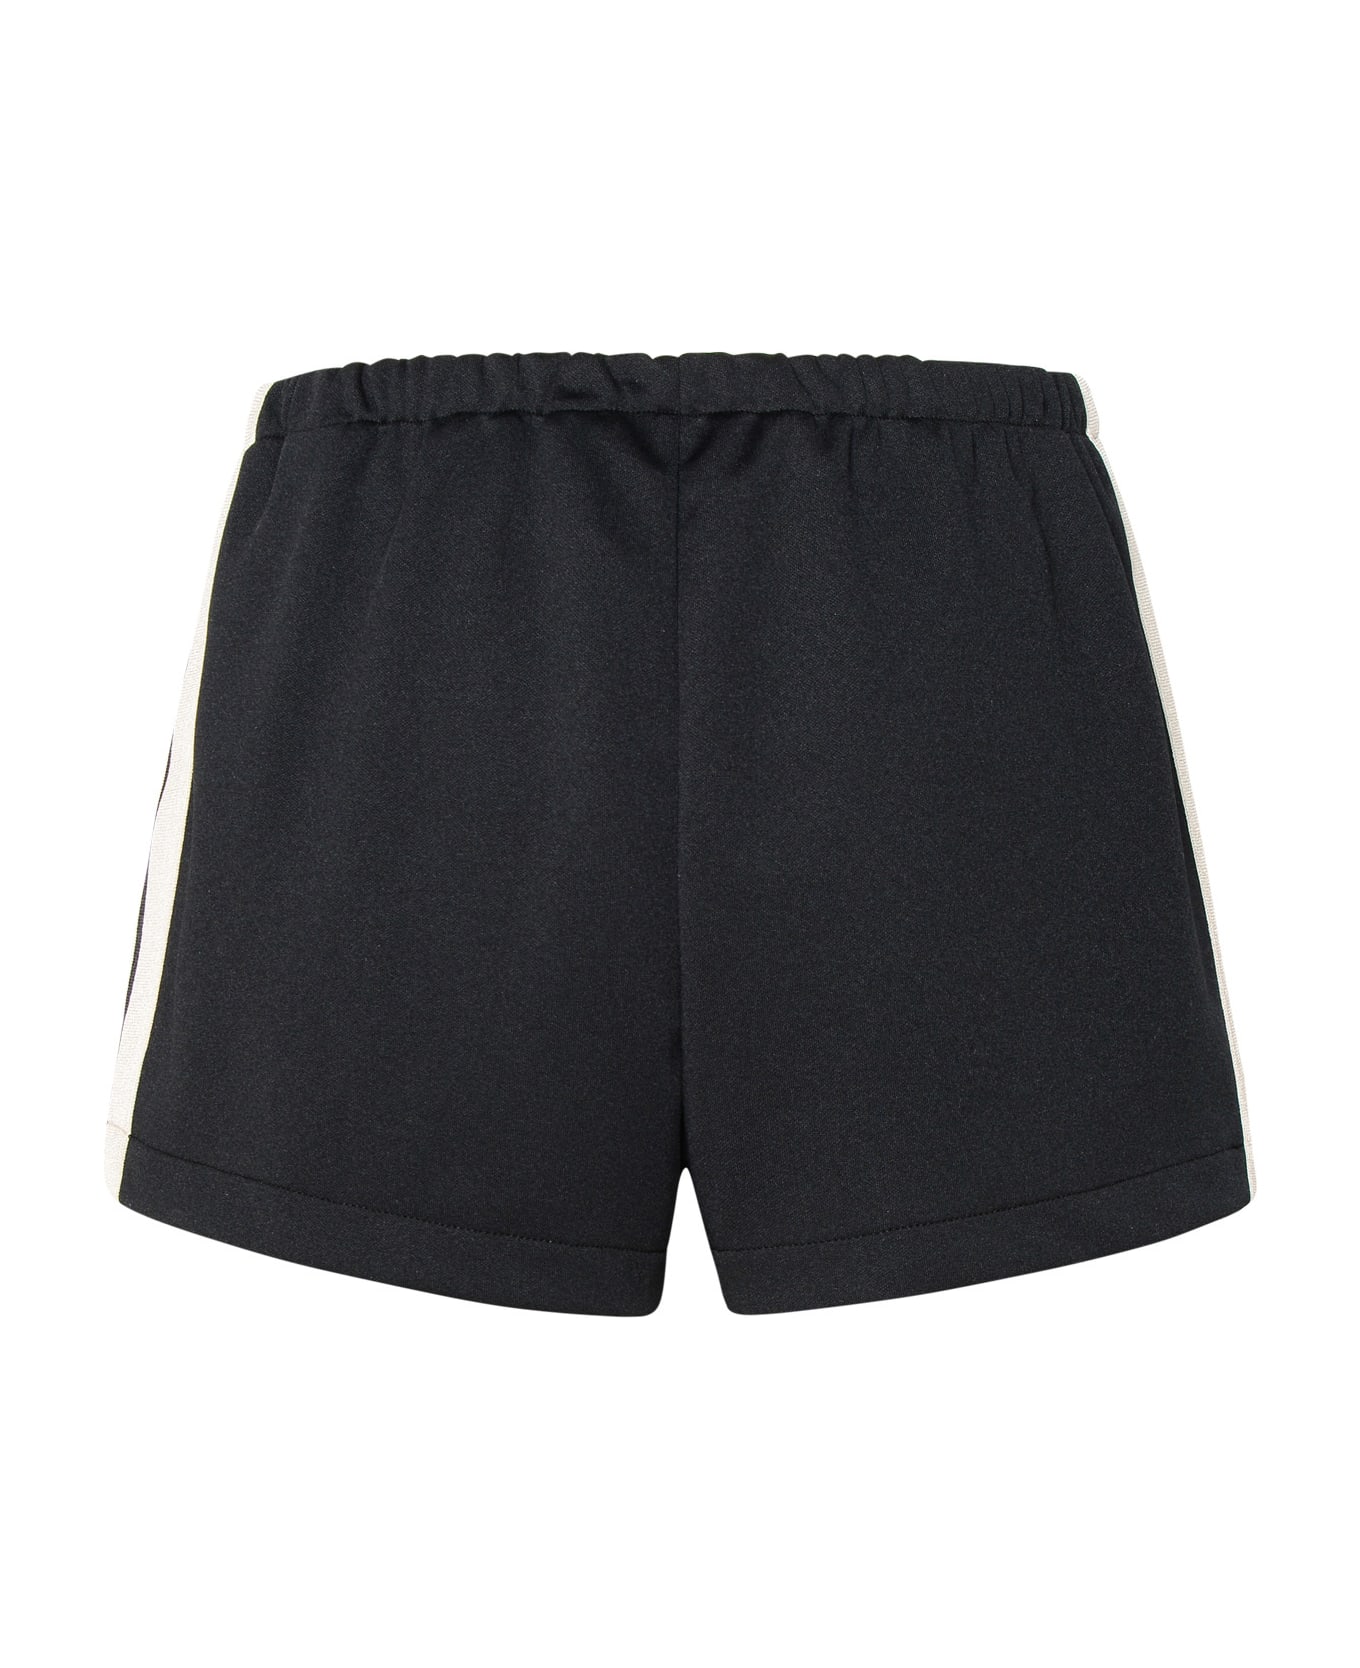 Palm Angels Black Polyester Sporty Shorts - Black off ショートパンツ